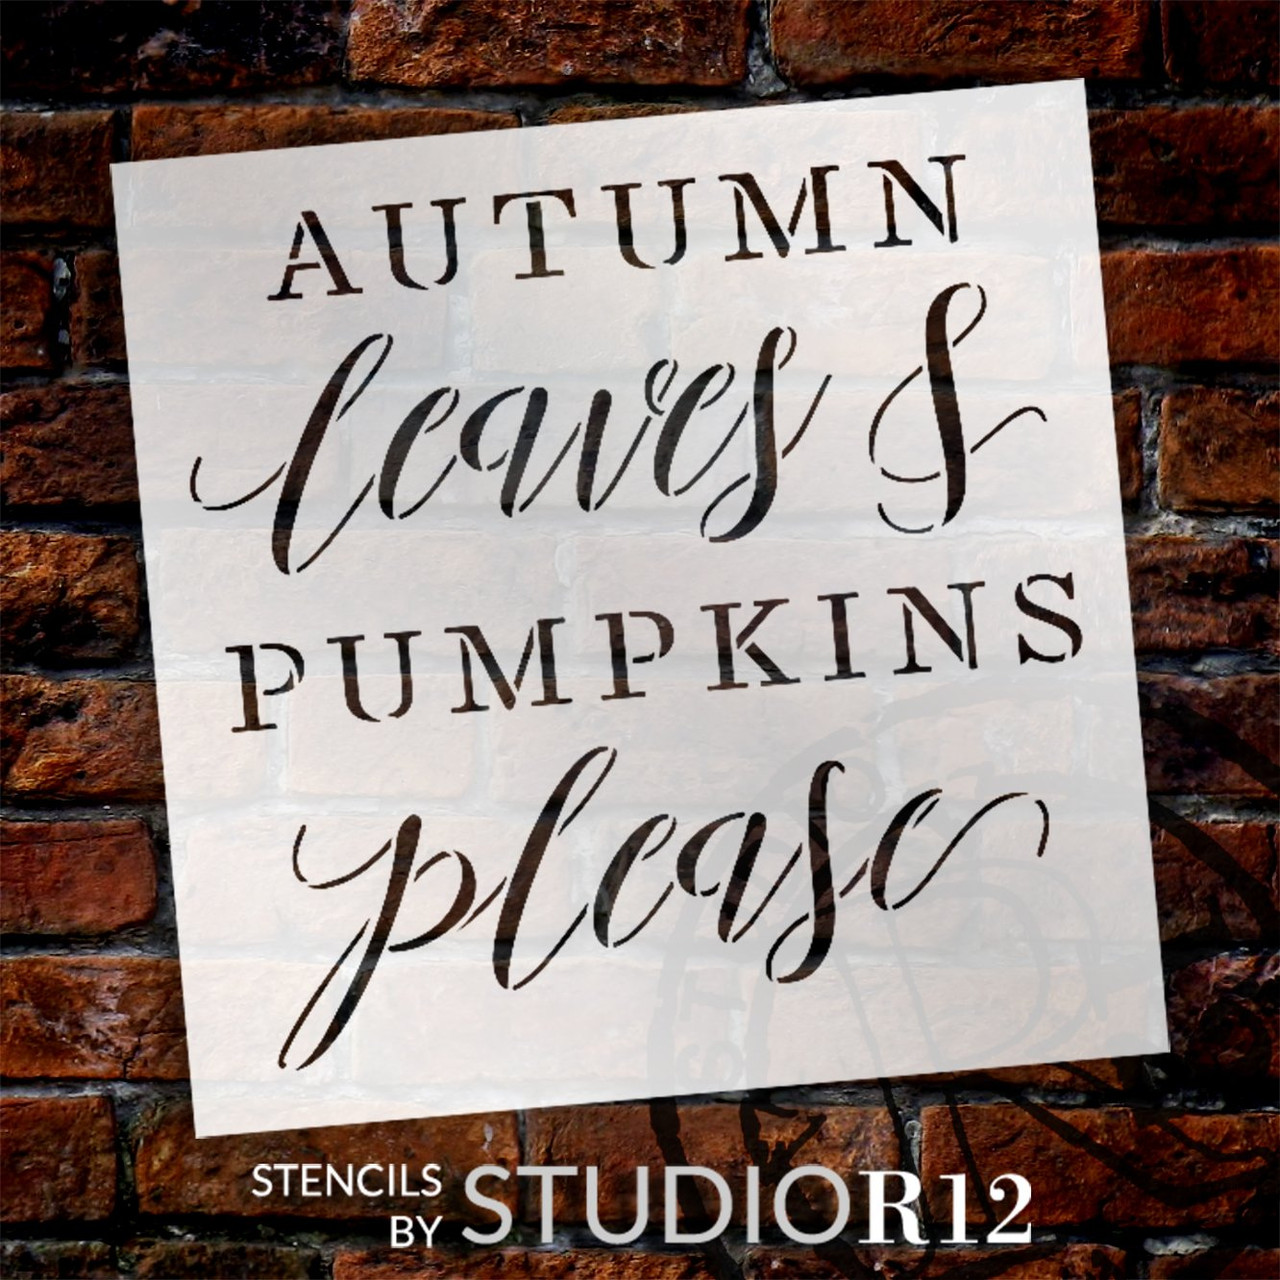 Autumn Leaves & Pumpkins Please Stencil by StudioR12 | Craft DIY Fall Farmhouse Home Decor | Paint Wood Sign | Reusable Mylar Template | Select Size